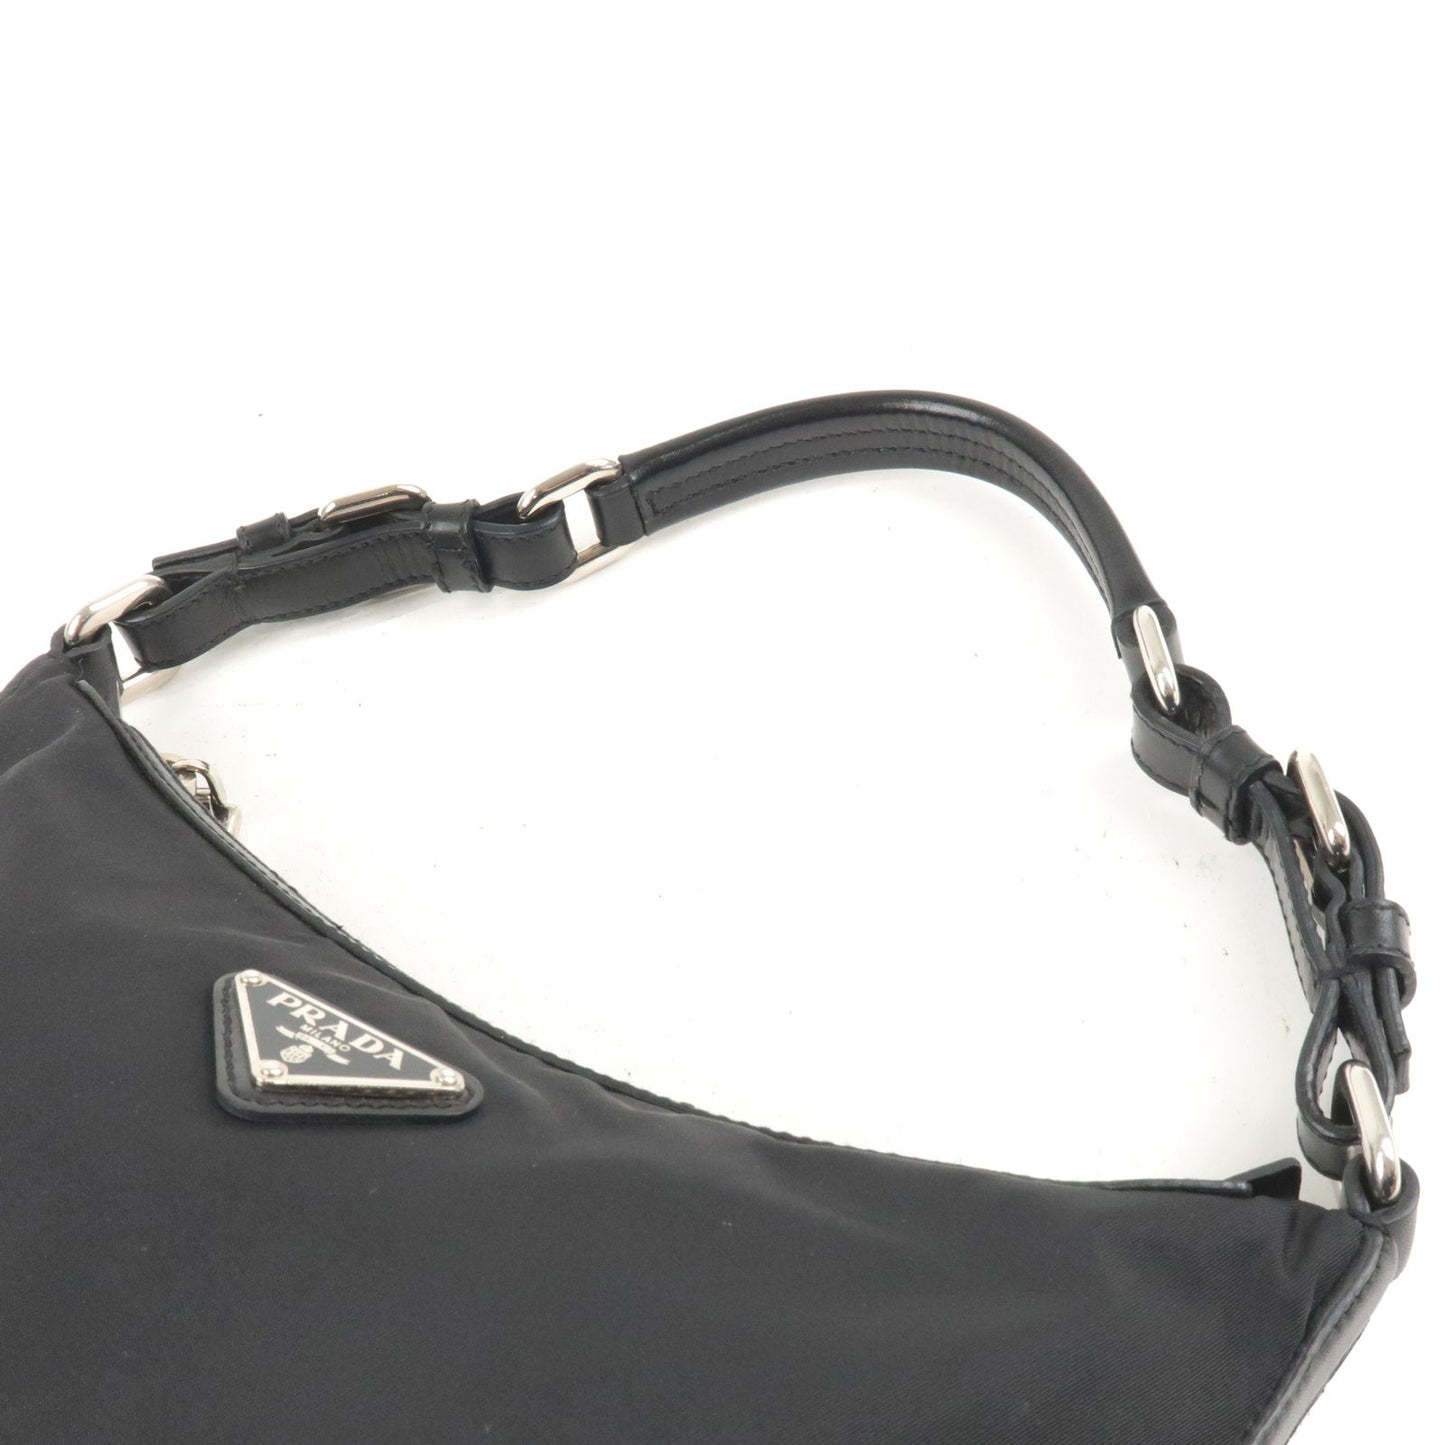 PRADA Logo Nylon Leather Shoulder Bag Hand Bag NERO Black